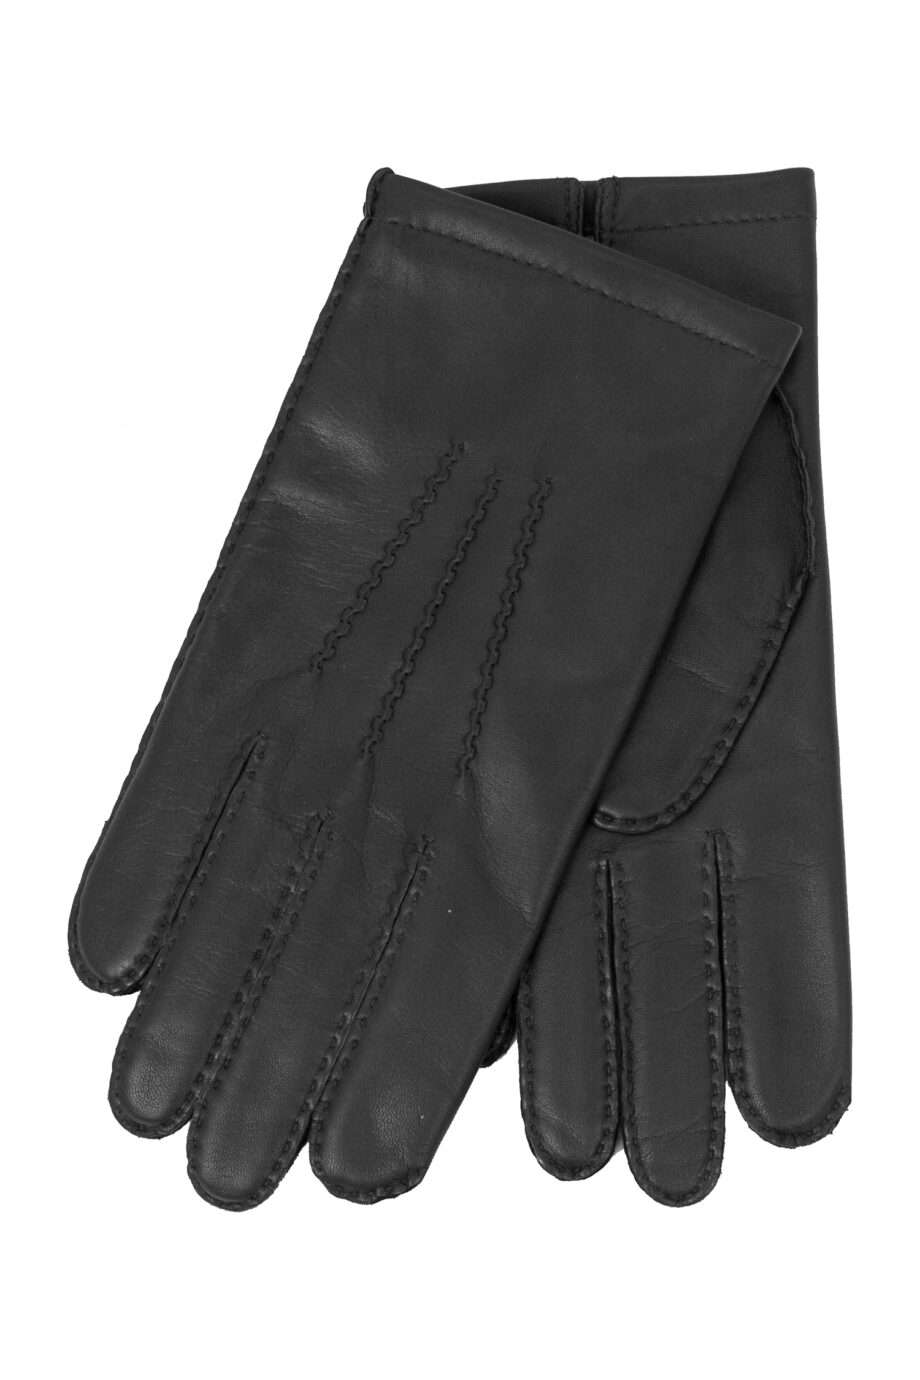 classic black leather glove (men) large